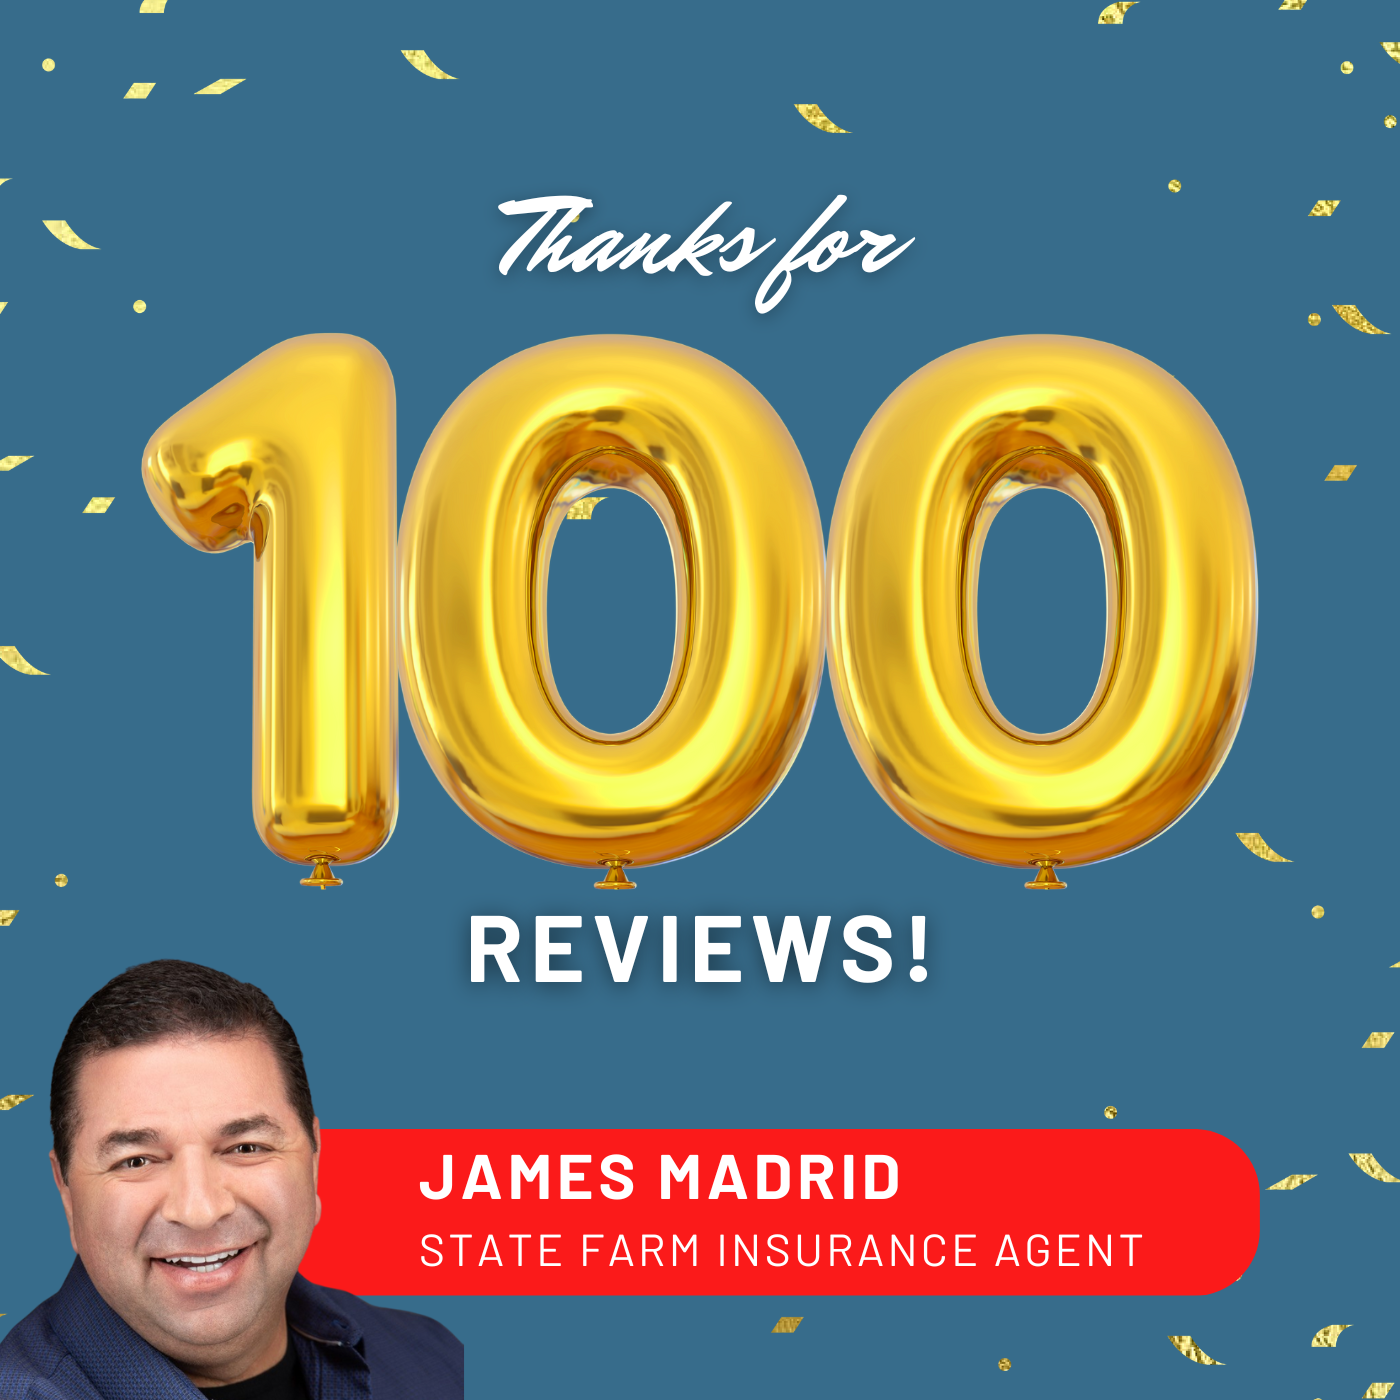 James Madrid - State Farm Insurance Agent
Thank you all for 100 Google reviews! James Madrid - State Farm Insurance Agent Las Vegas (702)998-8700